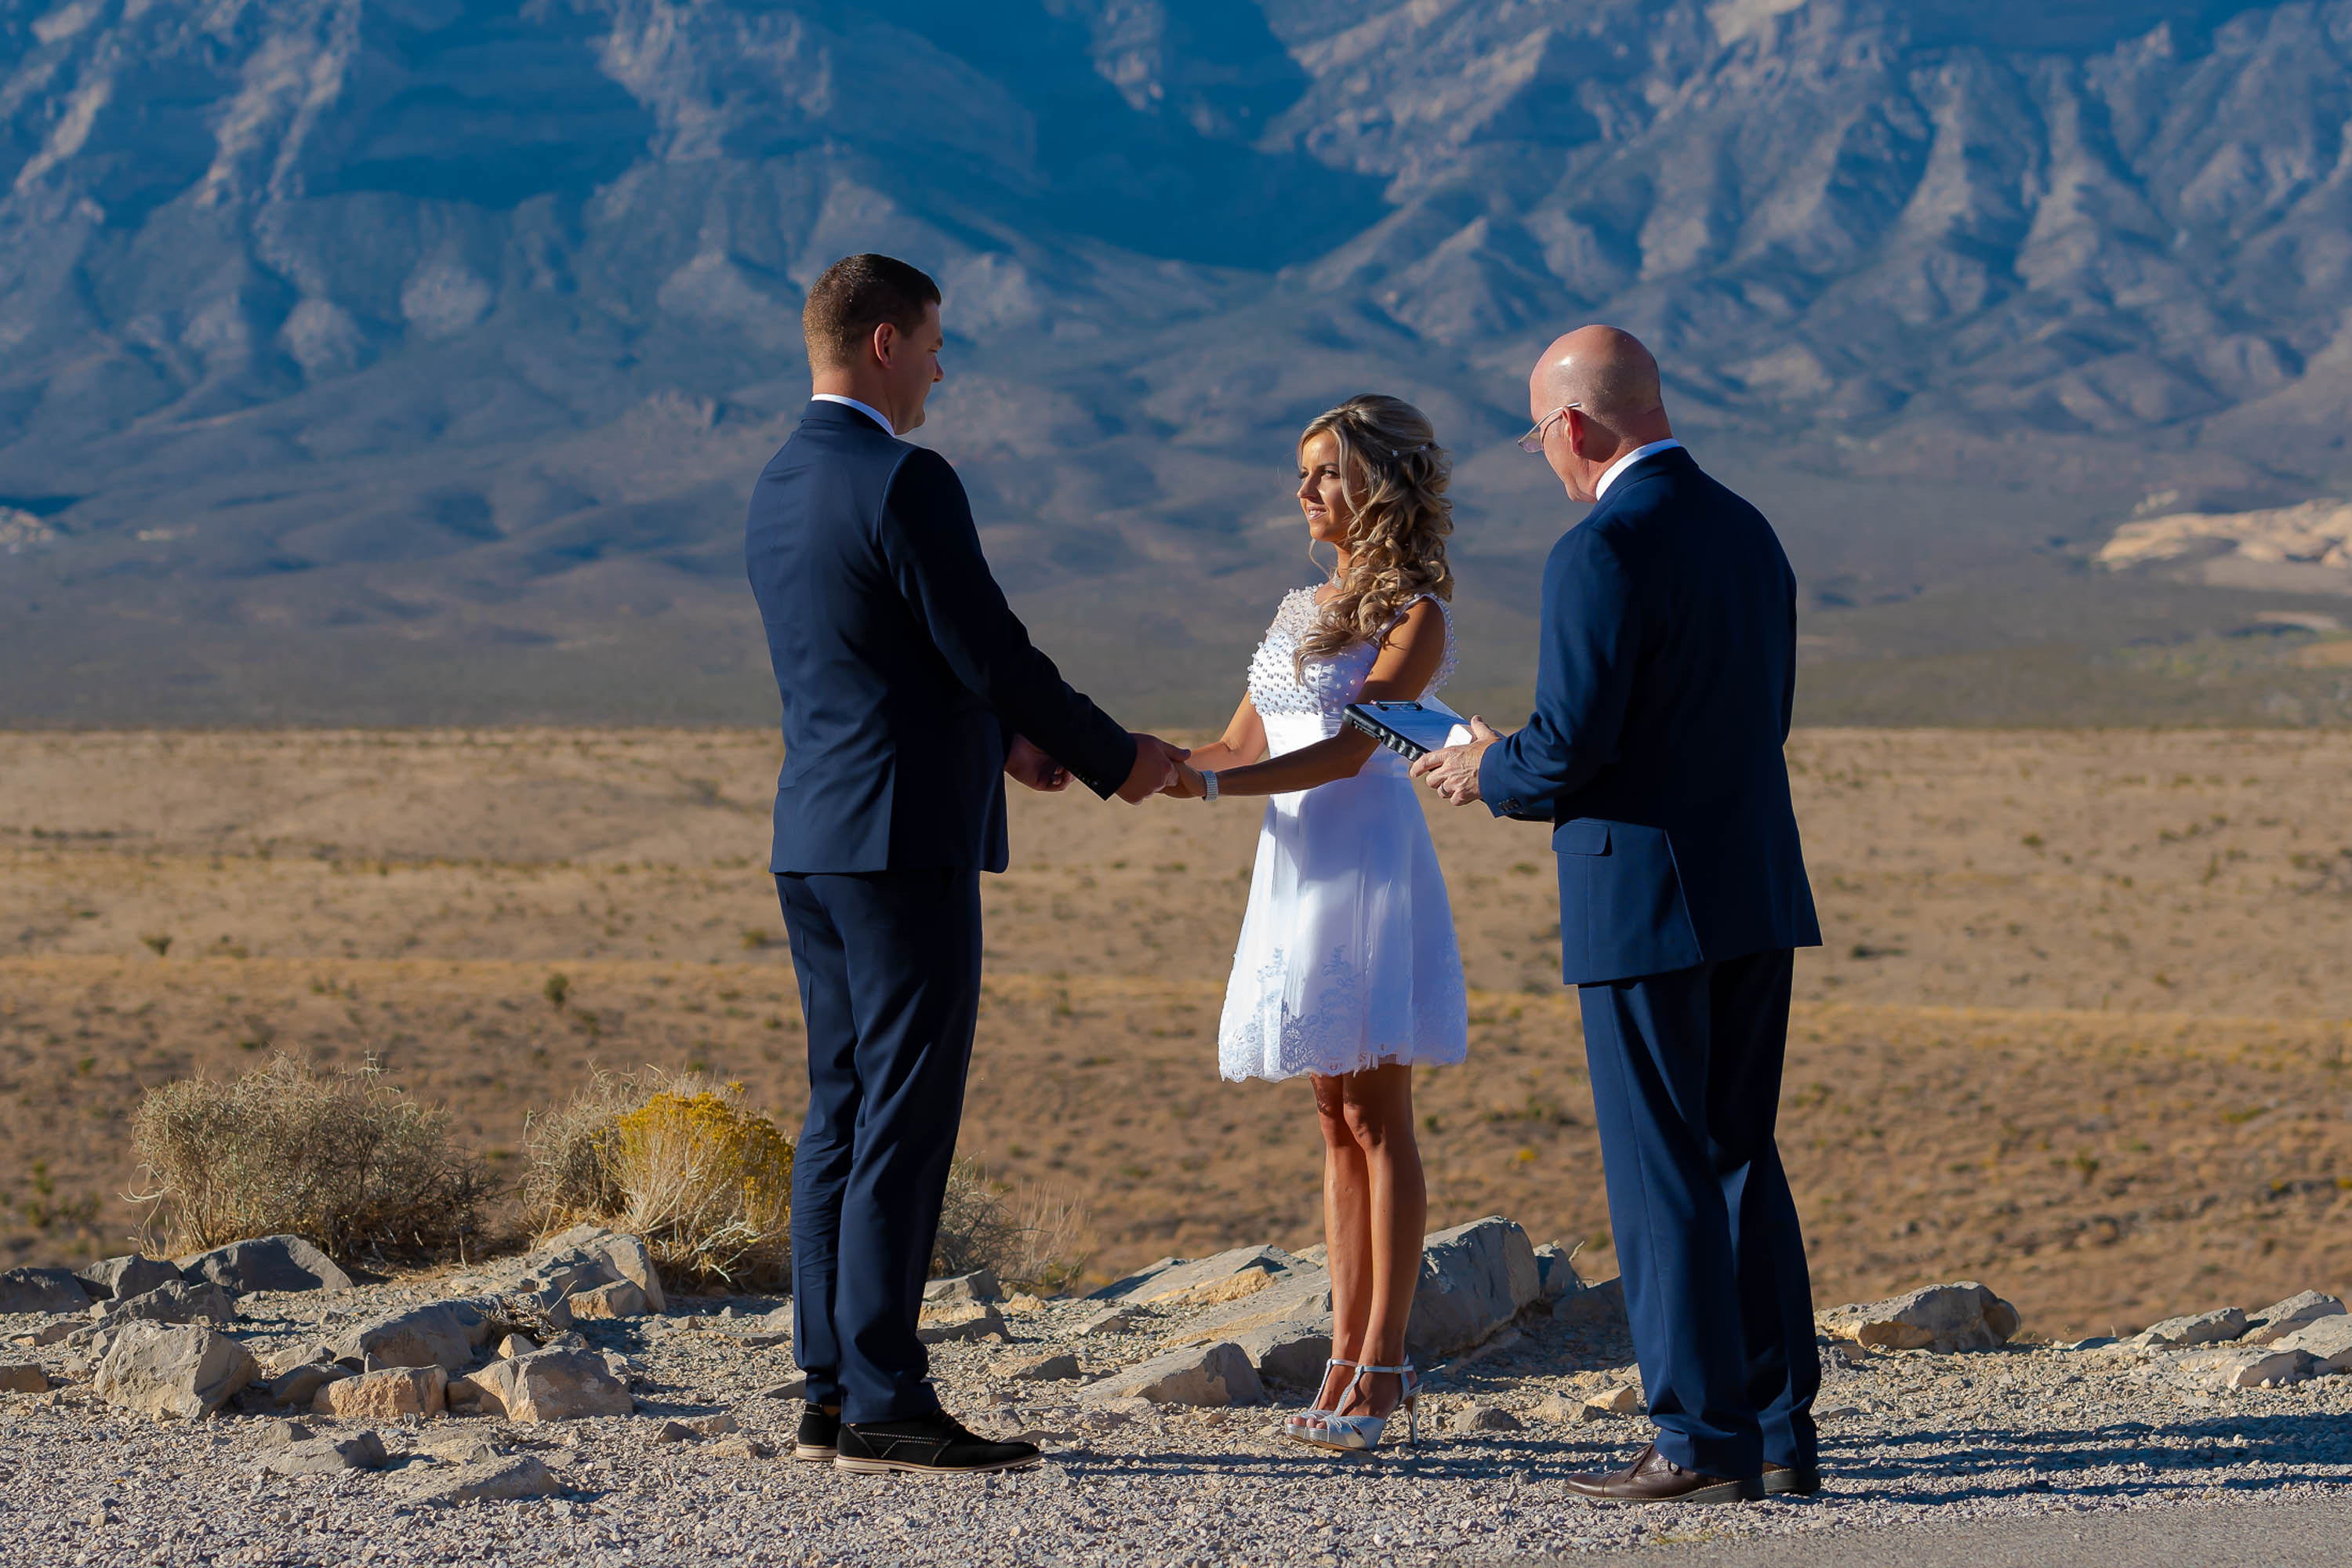 Las Vegas wedding photographer | Desert elopements weddings | Red Rock Canyon